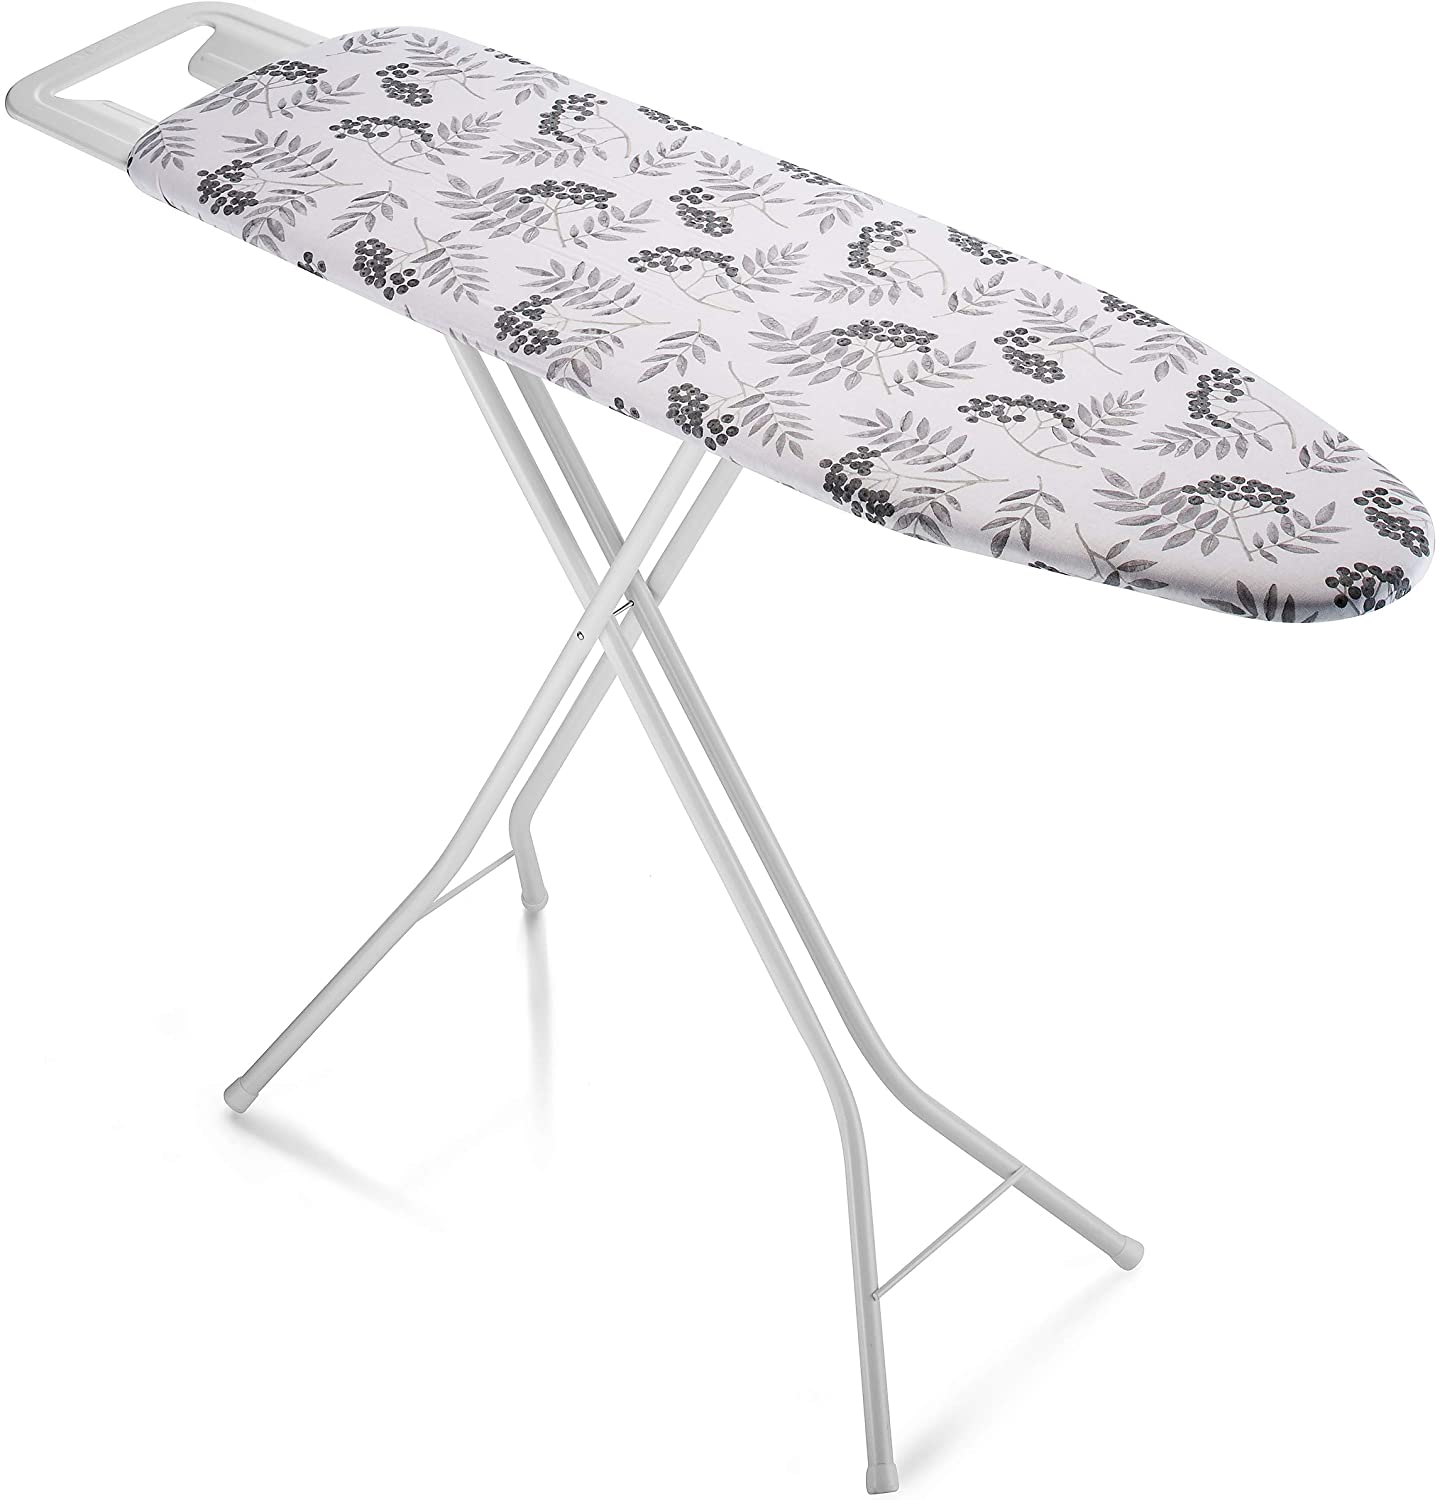 King do way Opensize 4-Leg Tabletop Ironing Board